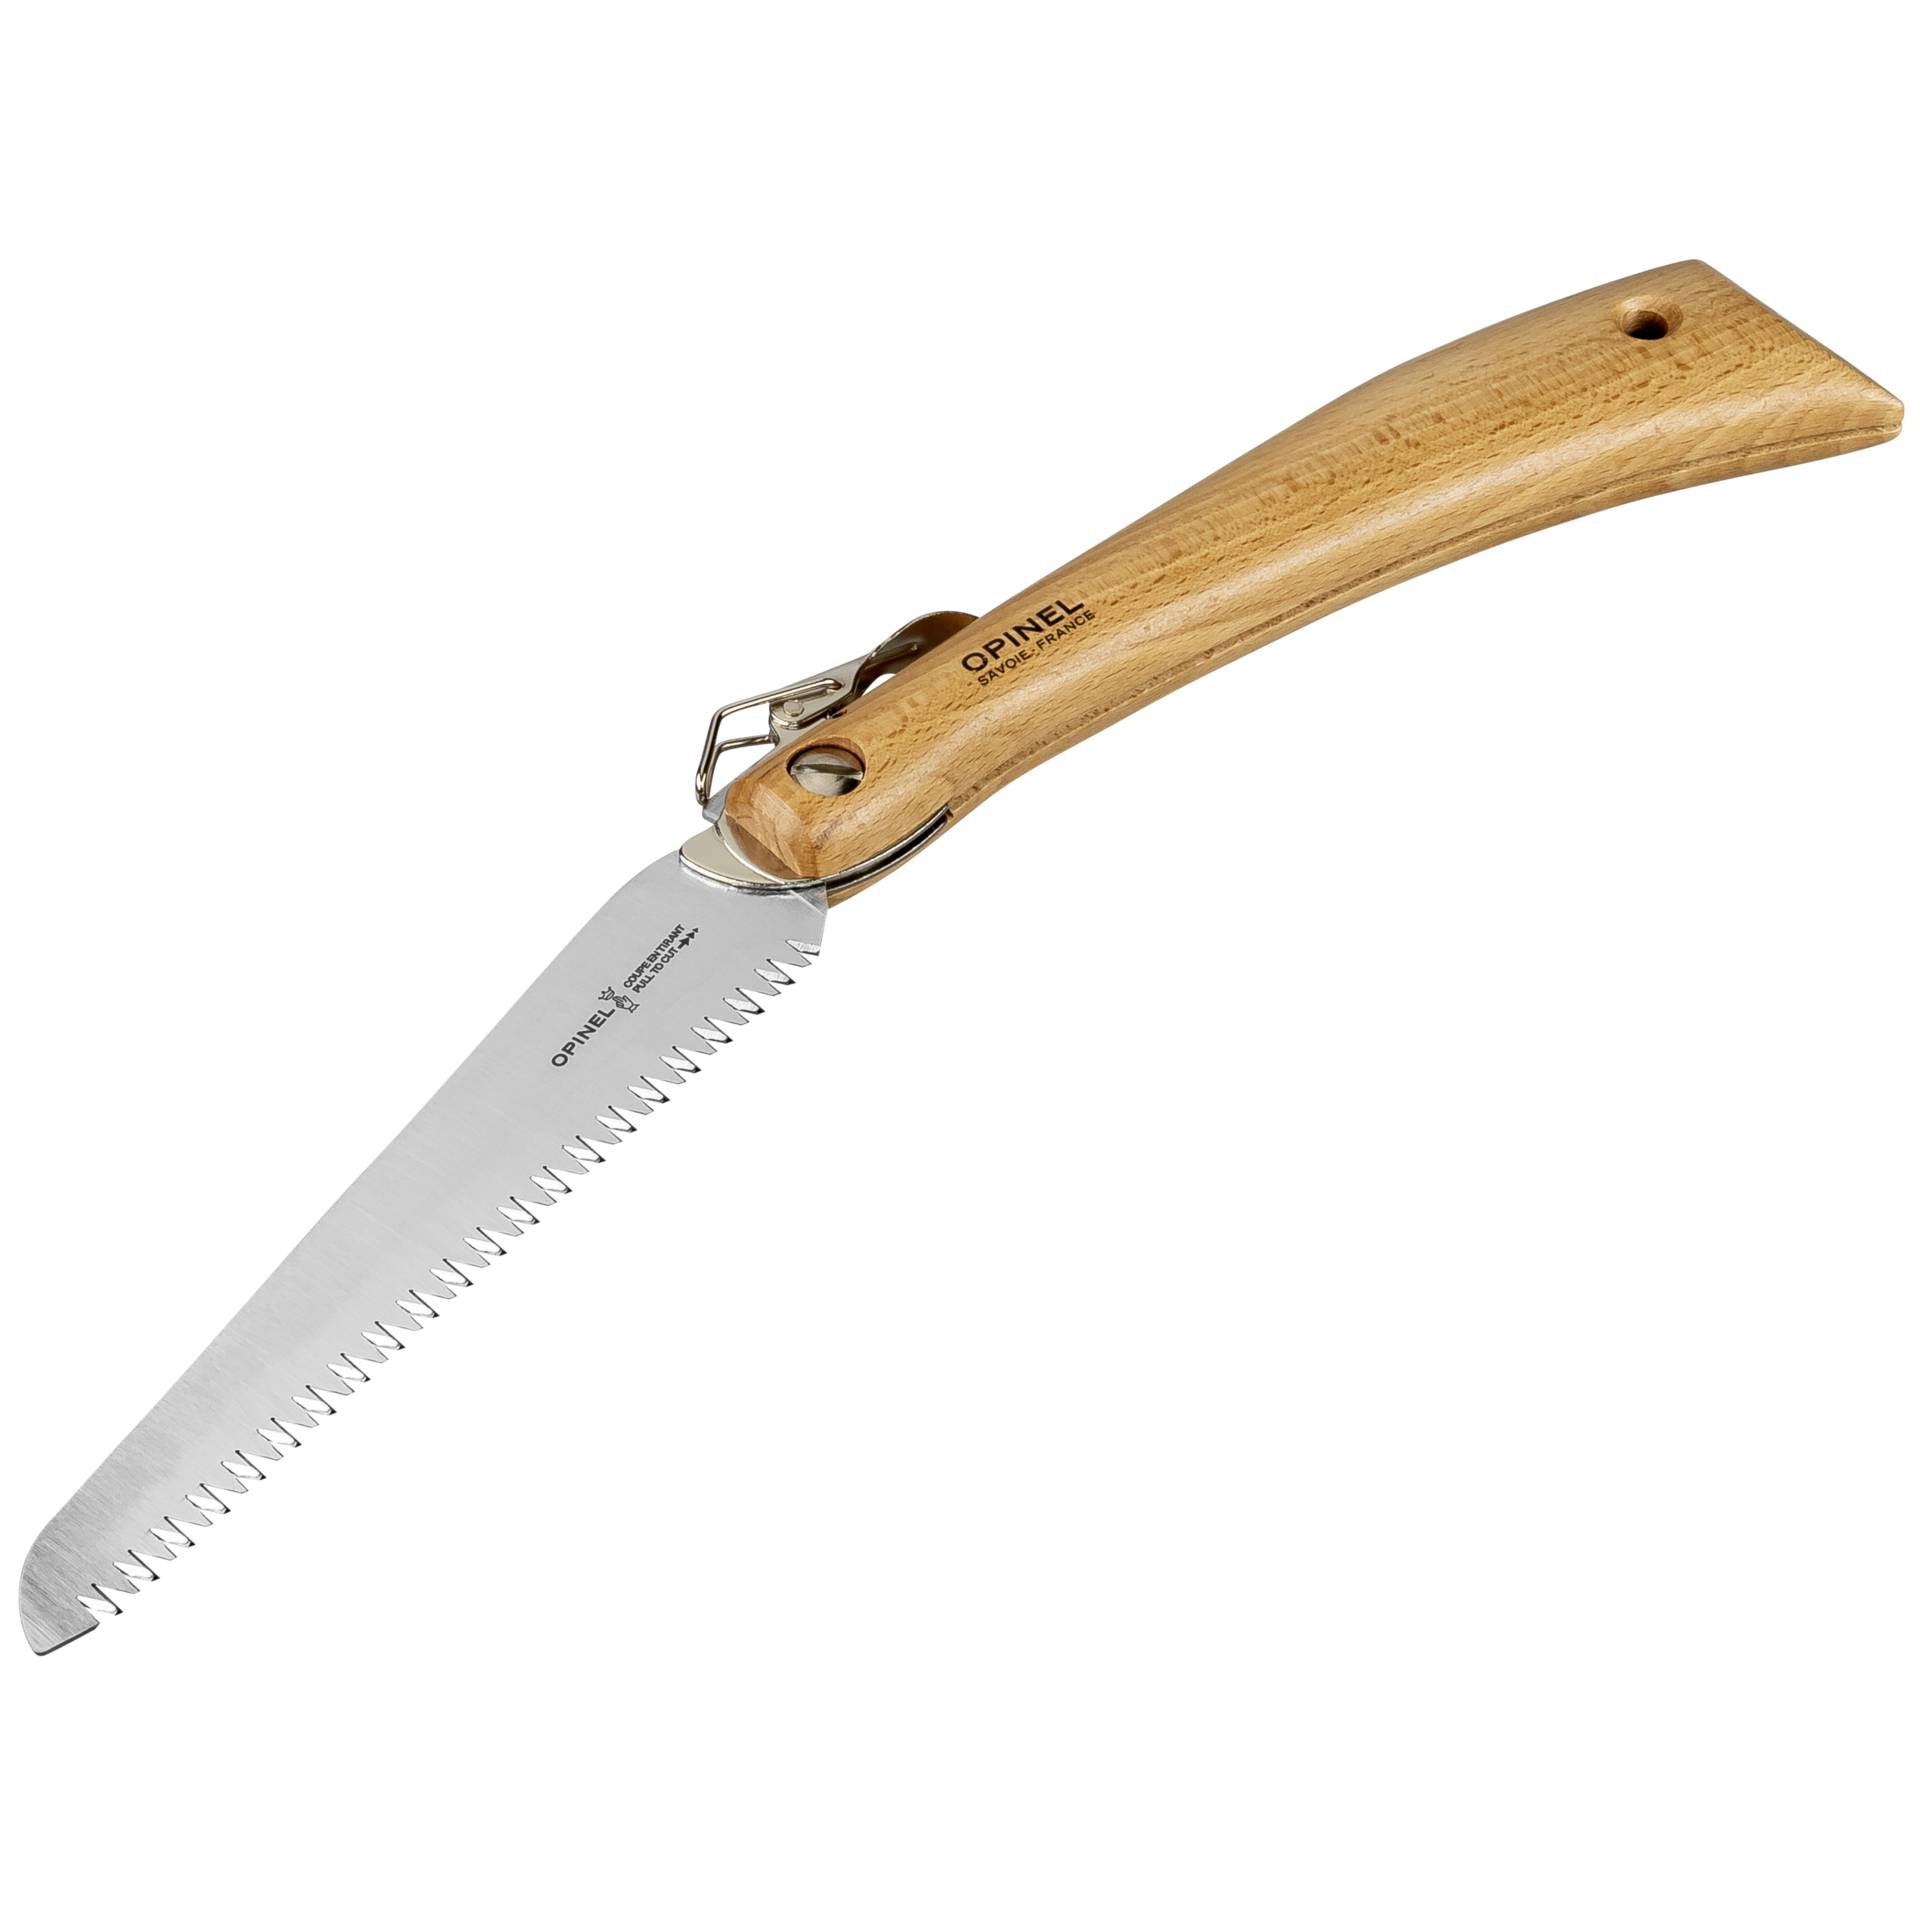 Opinel pocket knife No. 18 tree saw